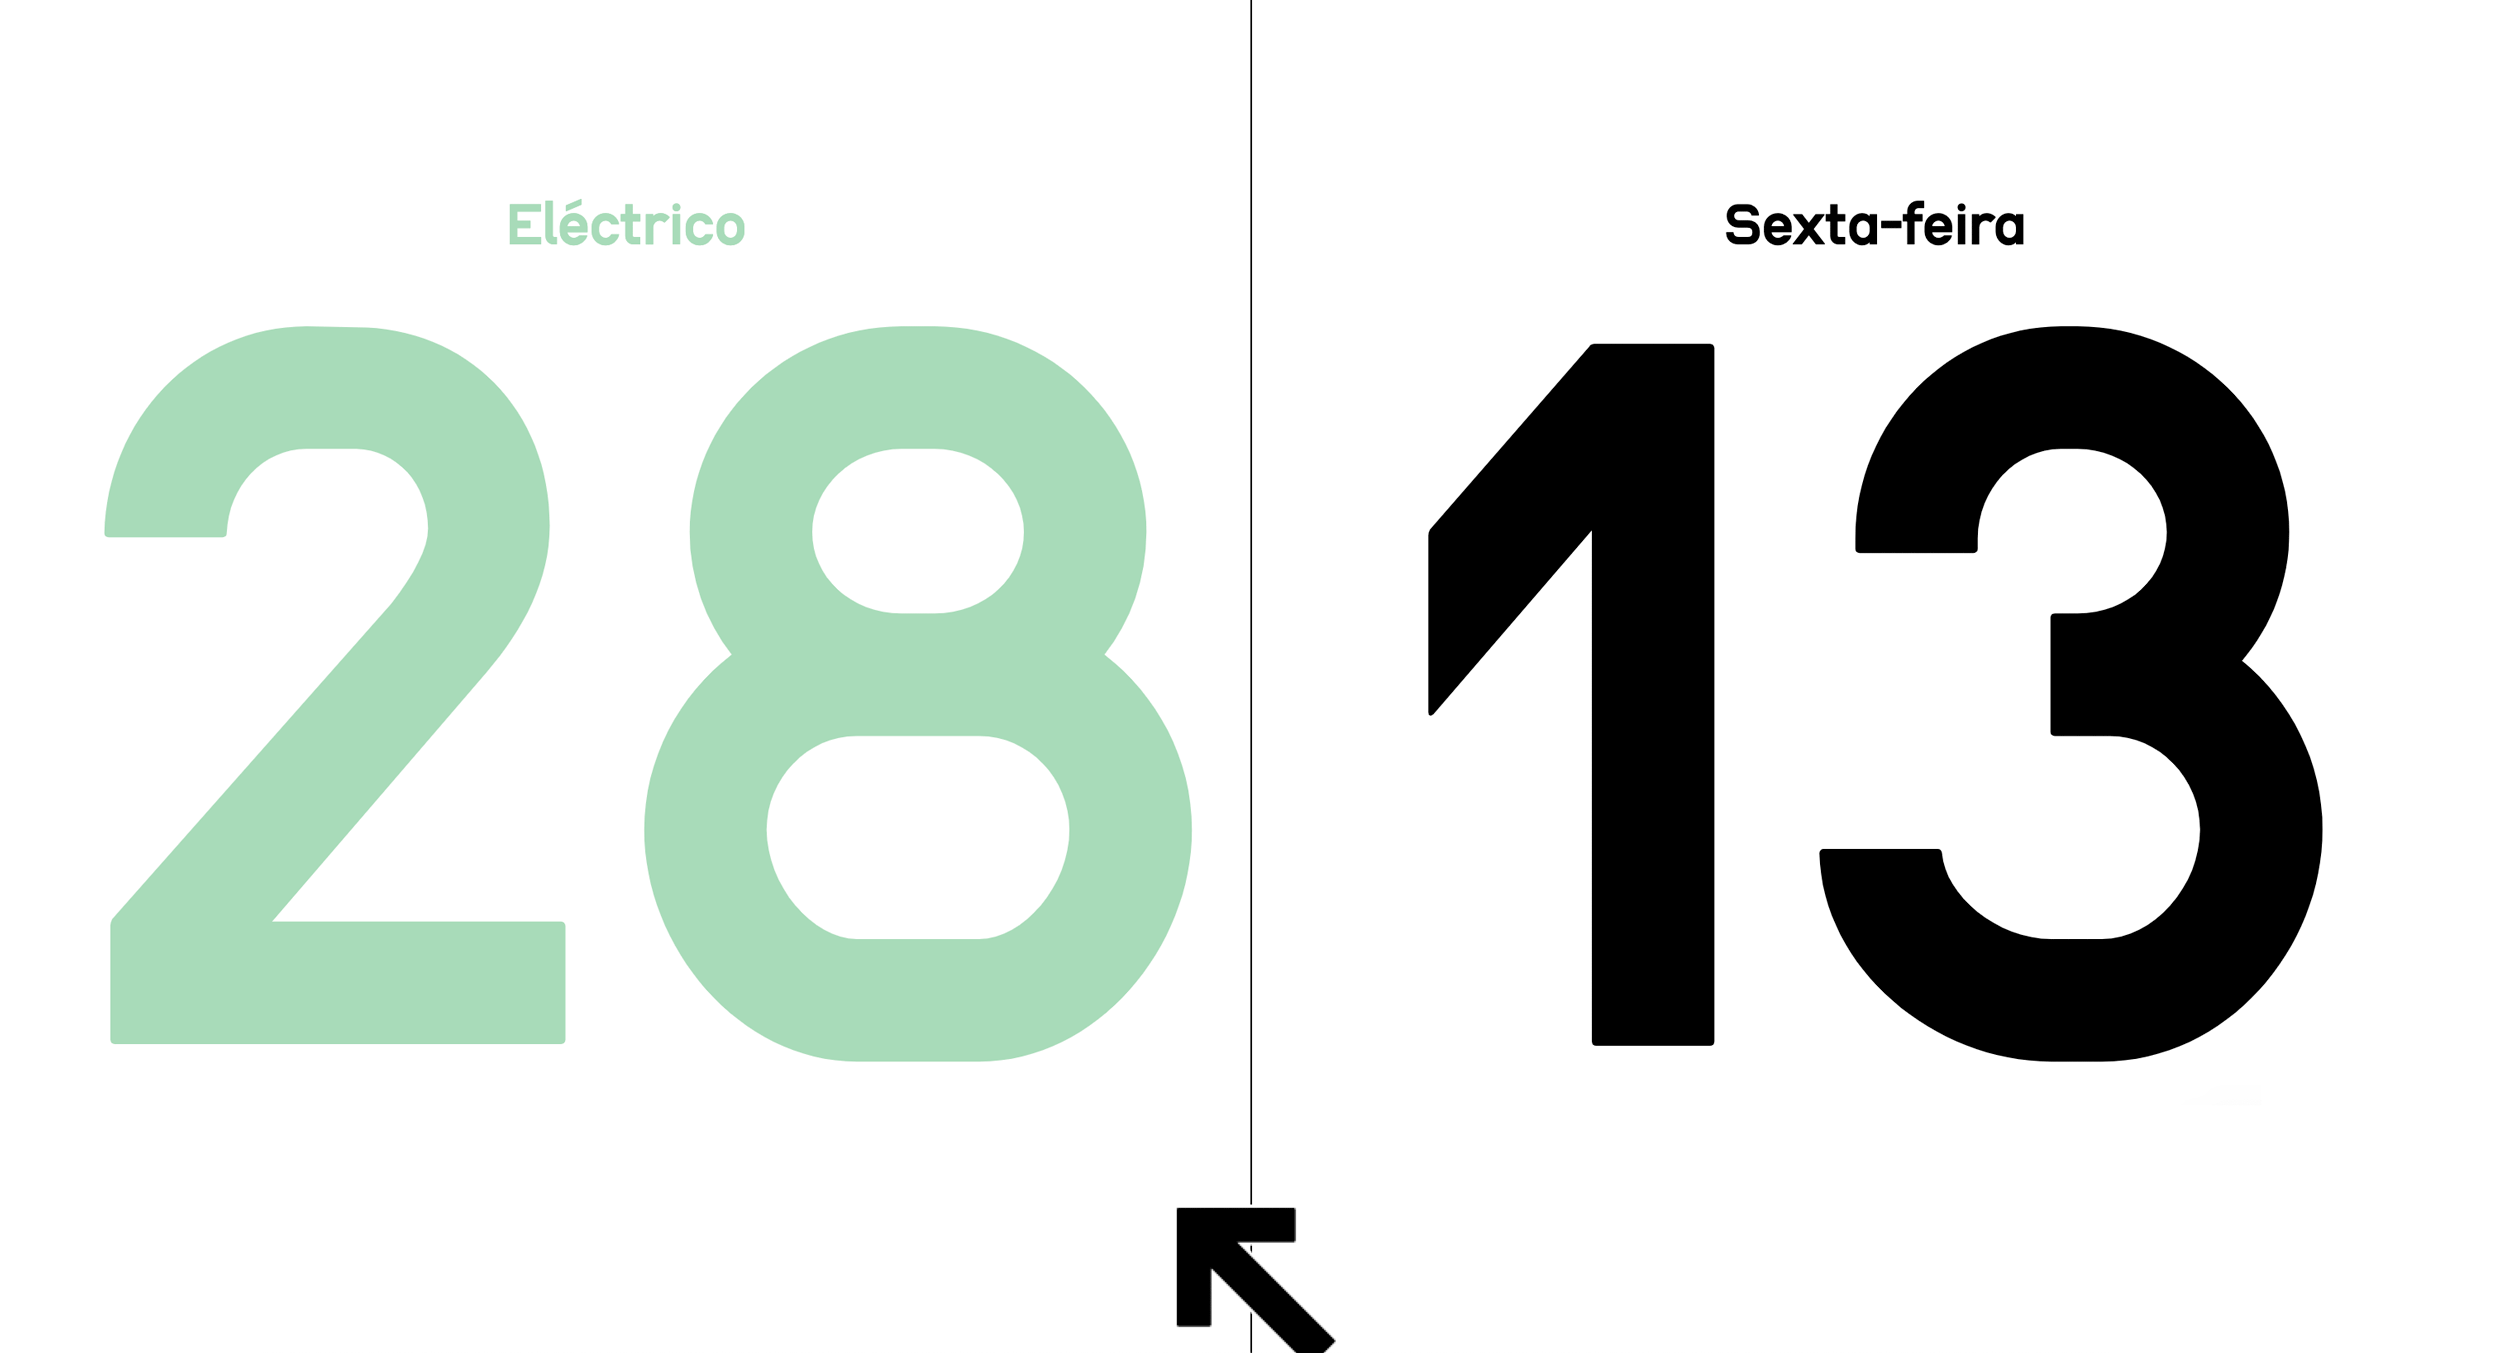 Büro Gestalten: Pedro Microsite (Eléctrico 28)